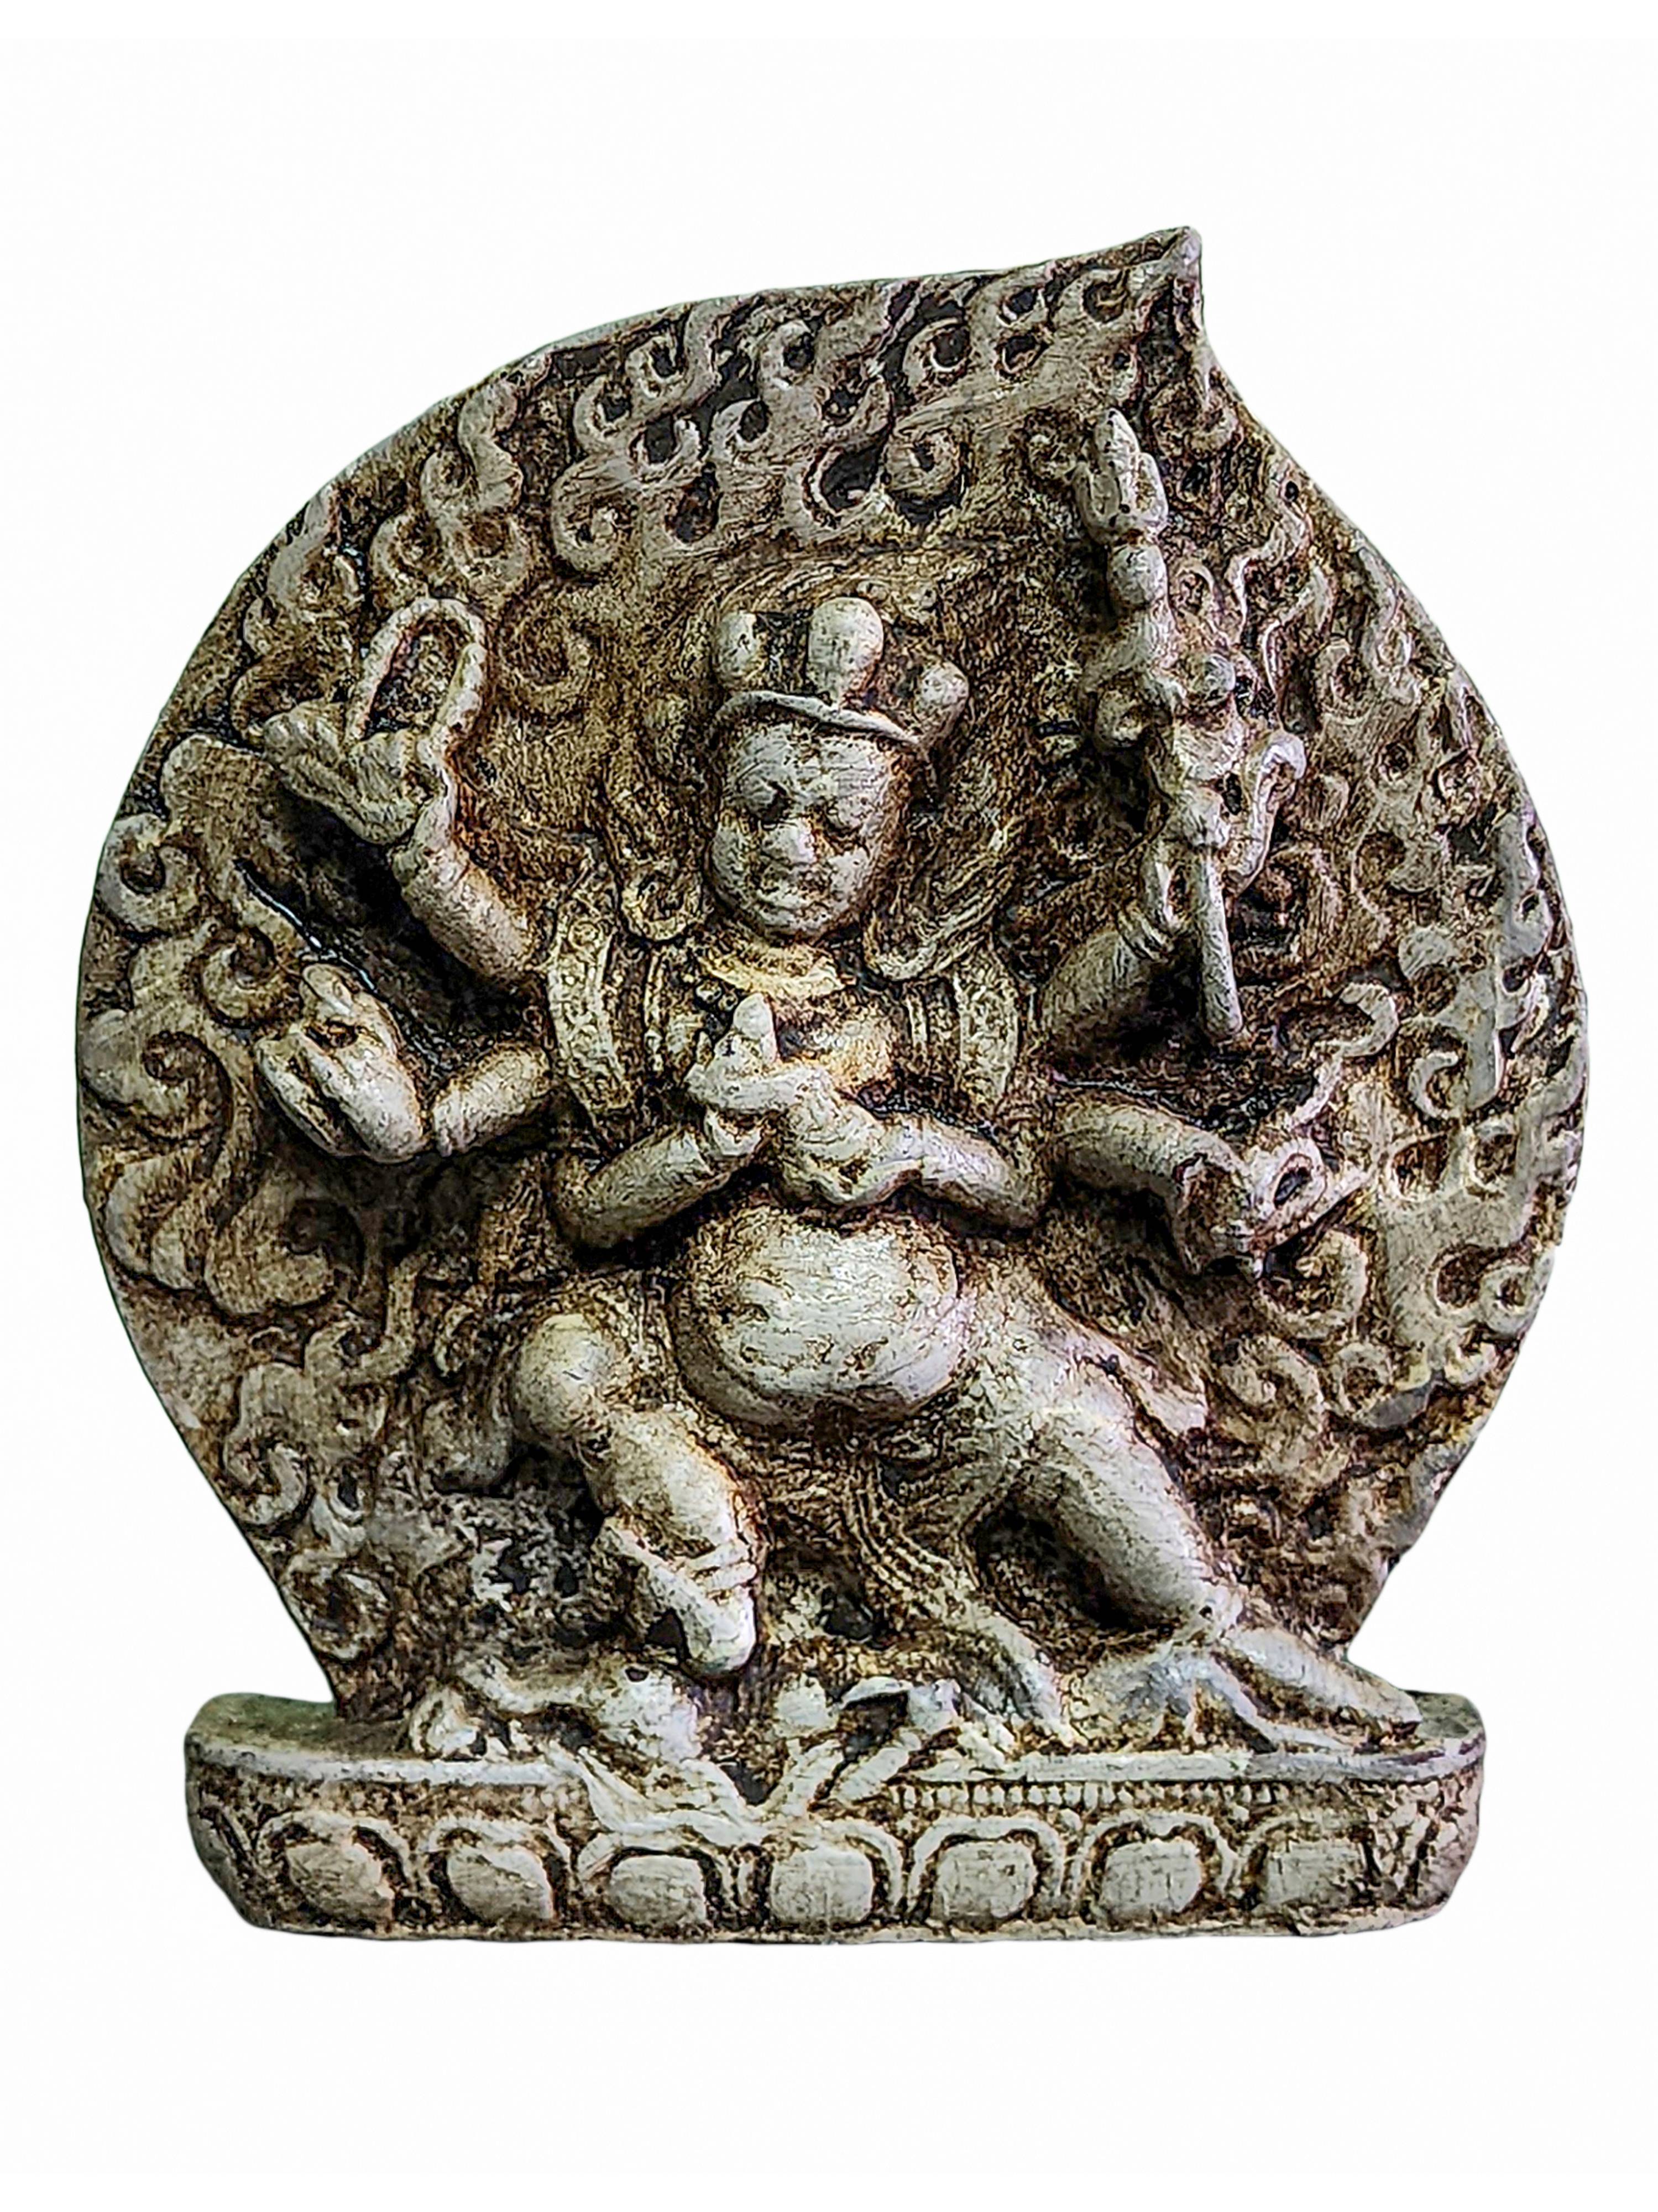 vajrapani, Buddhist Miniature Statue, resin Mold